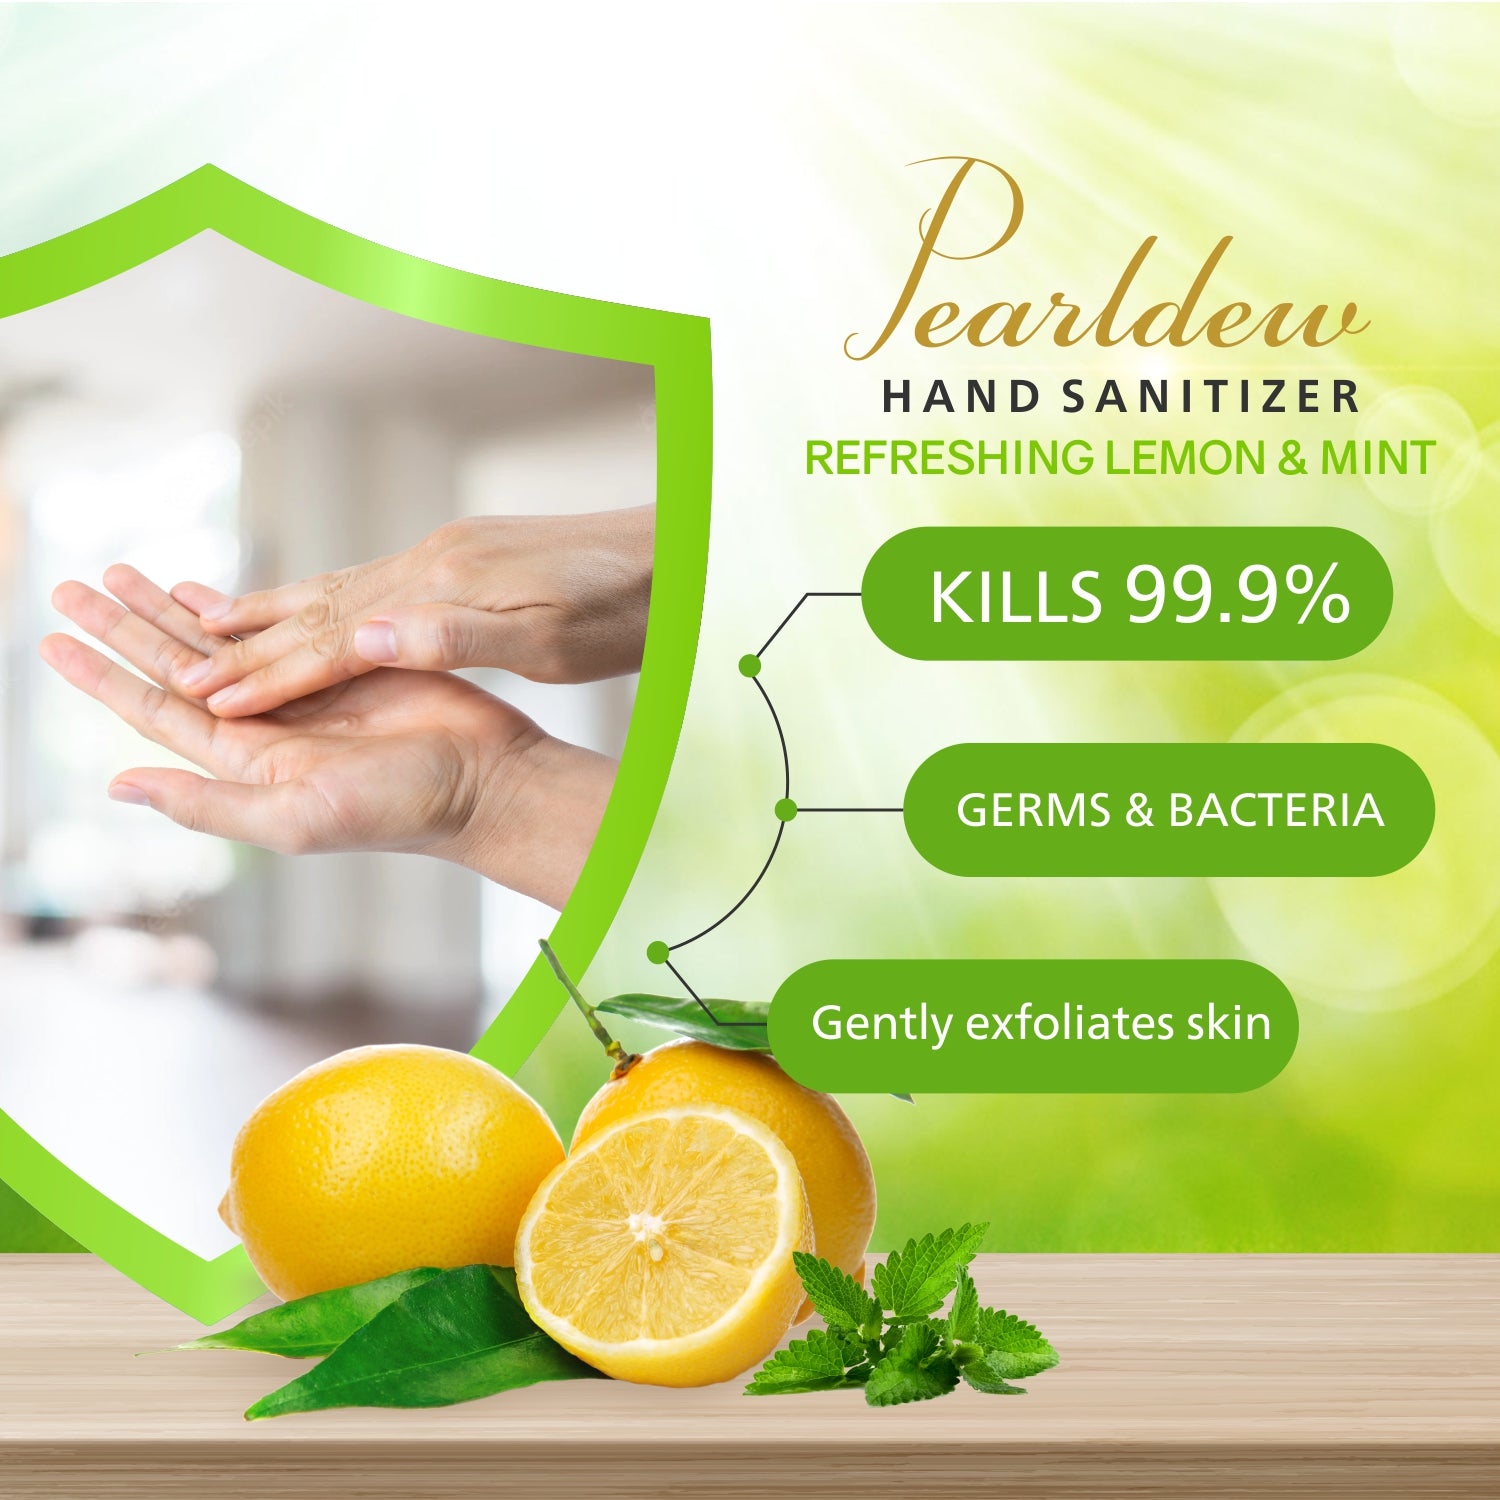 Pearldew Hand Sanitizer Gel (Refreshing Lemon & Mint) 100 ml